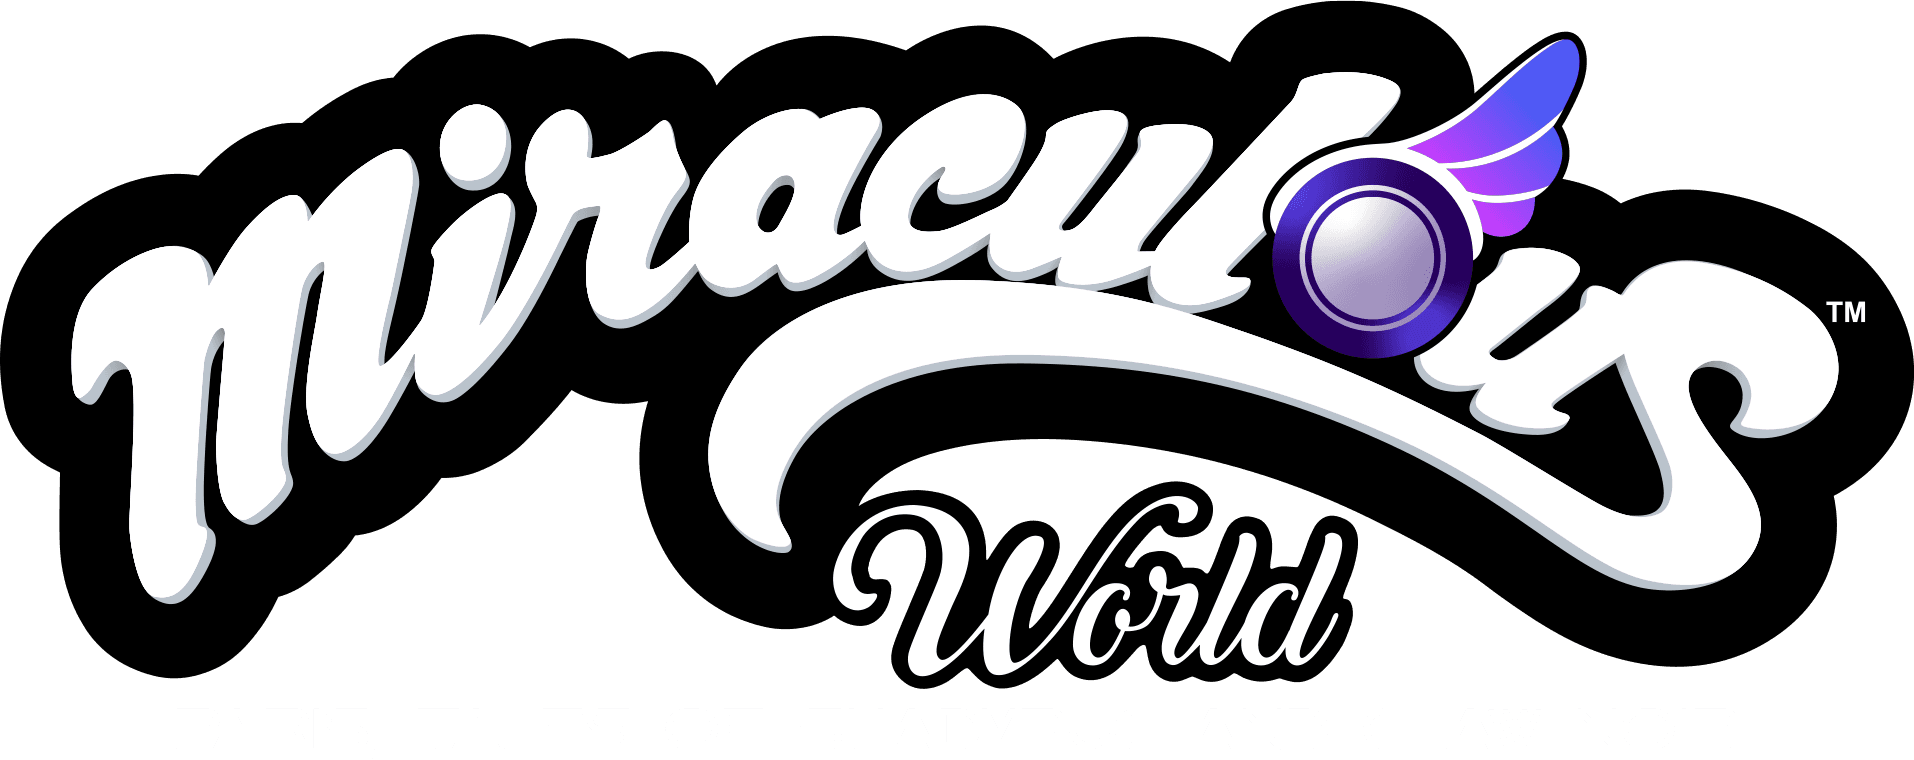 Miraculous World: Paris, Tales of Shadybug and Claw Noir logo